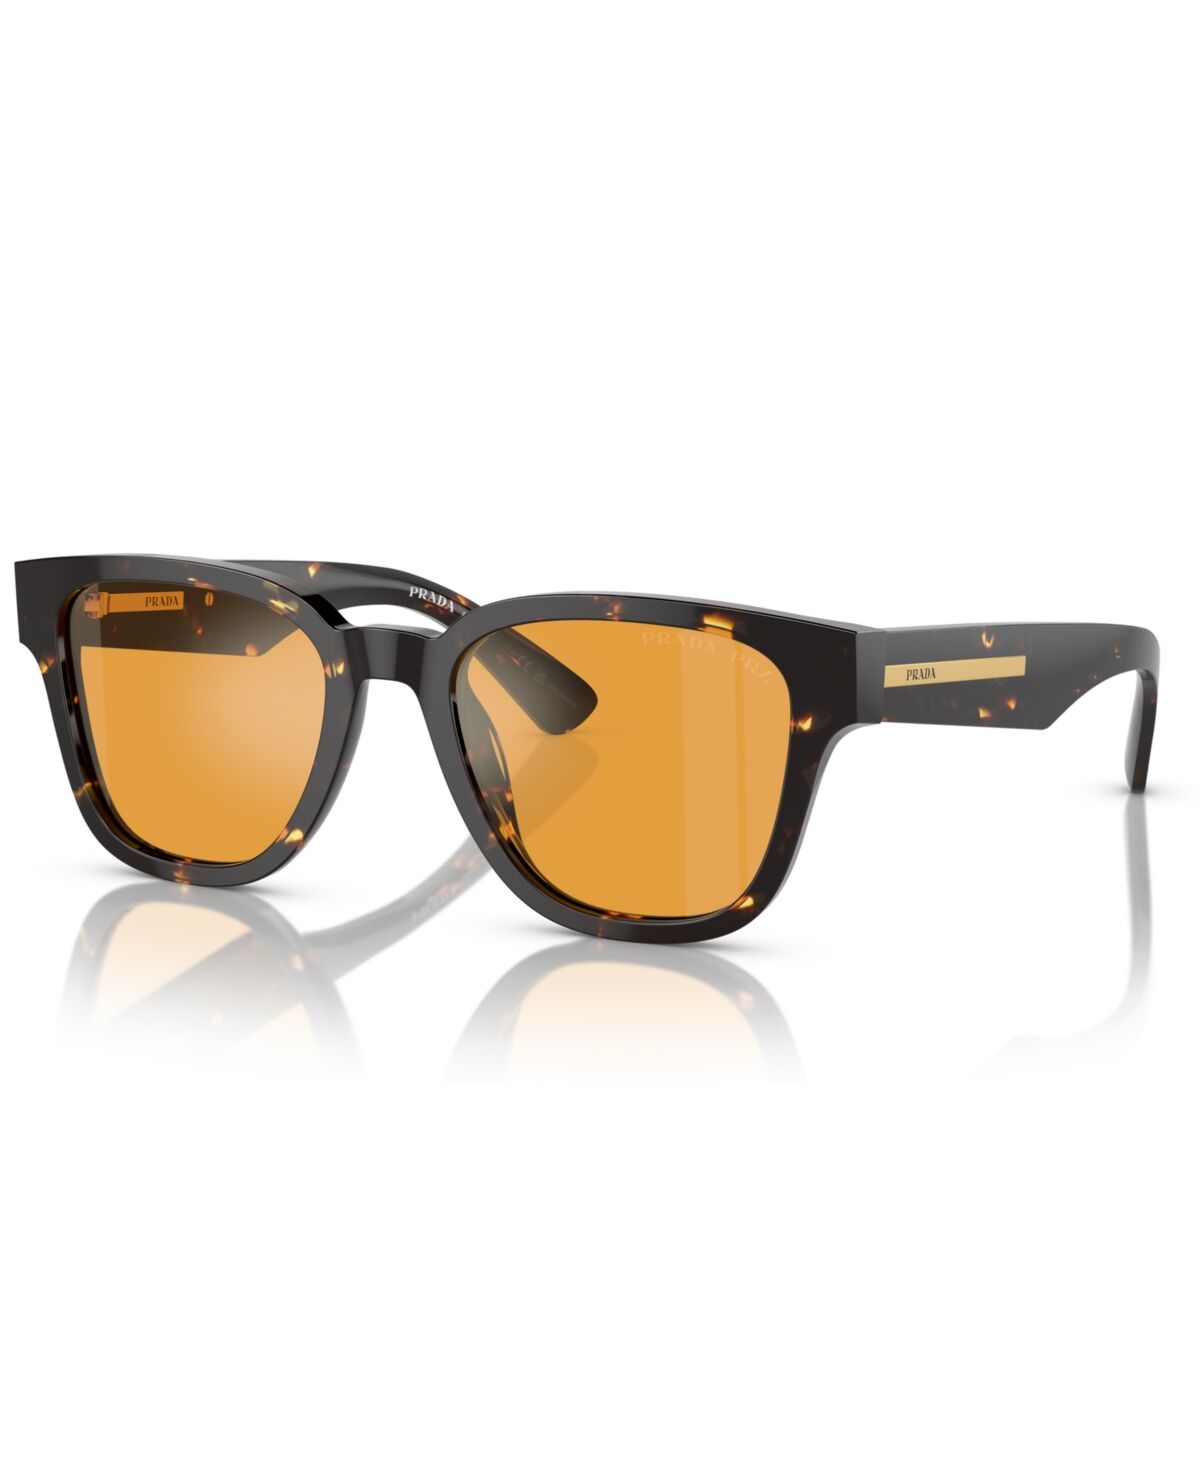 Prada Men's Polarized Sunglasses, Pr A04S - Havana Black, Yellow